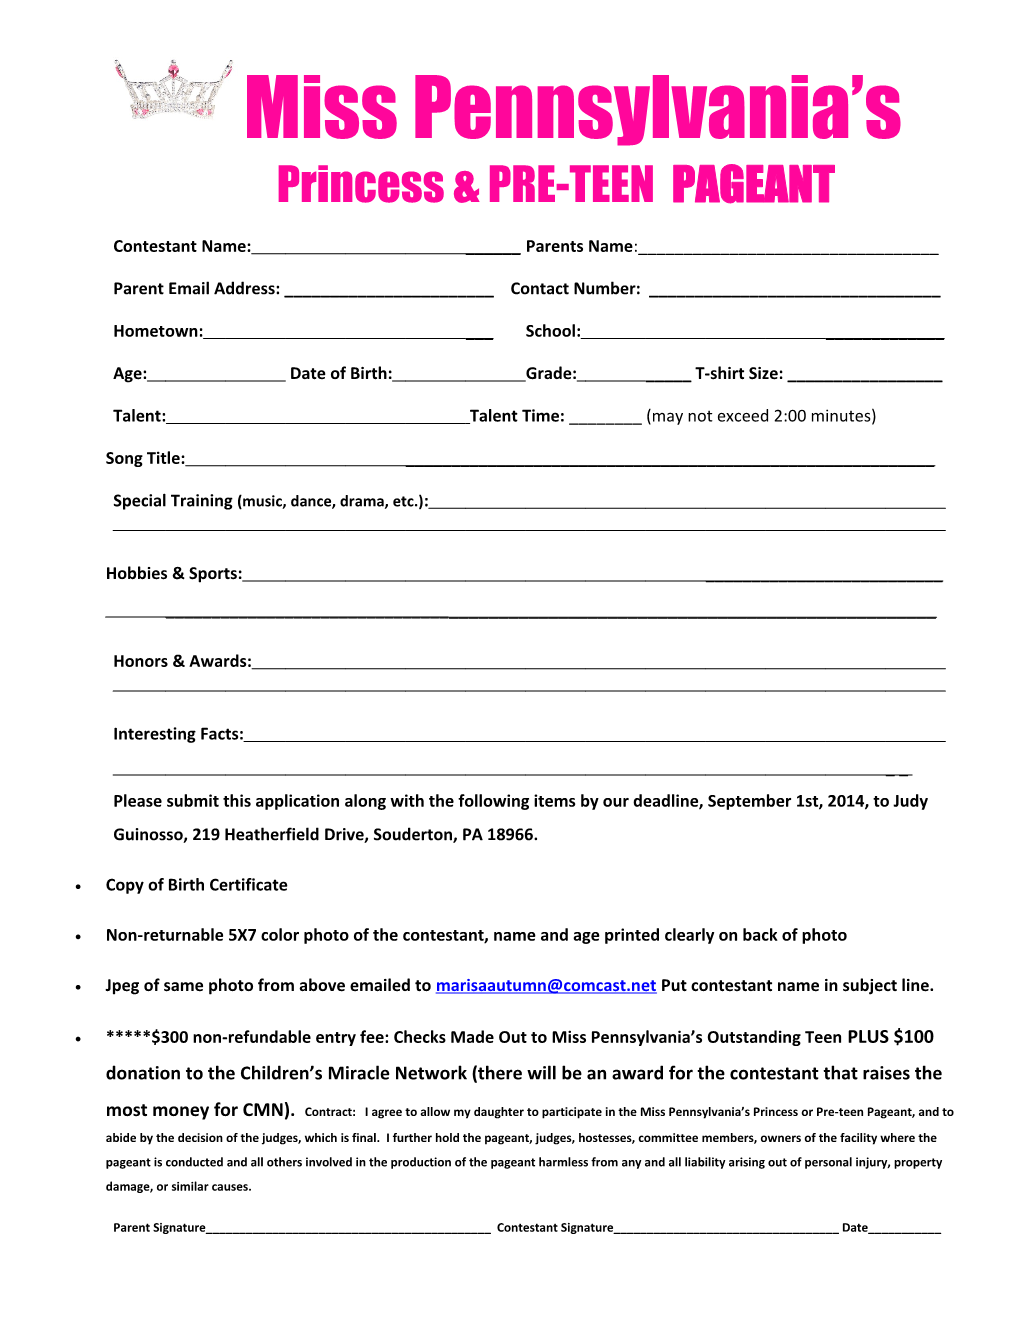 Princess & PRE-TEEN PAGEANT